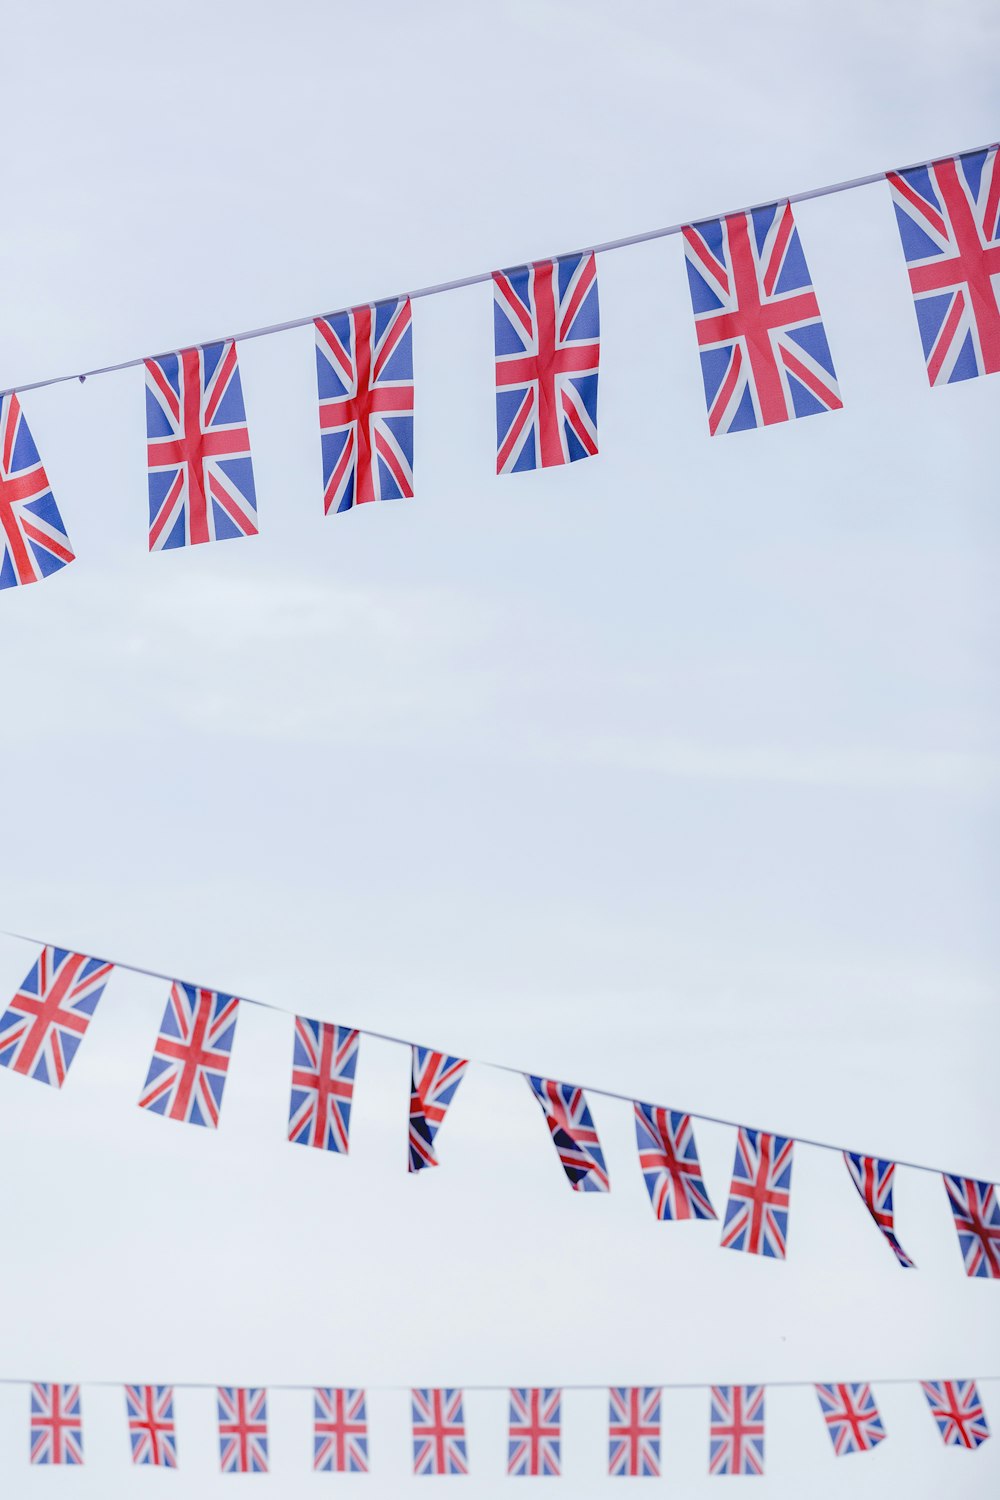 Bruants de drapeau britannique